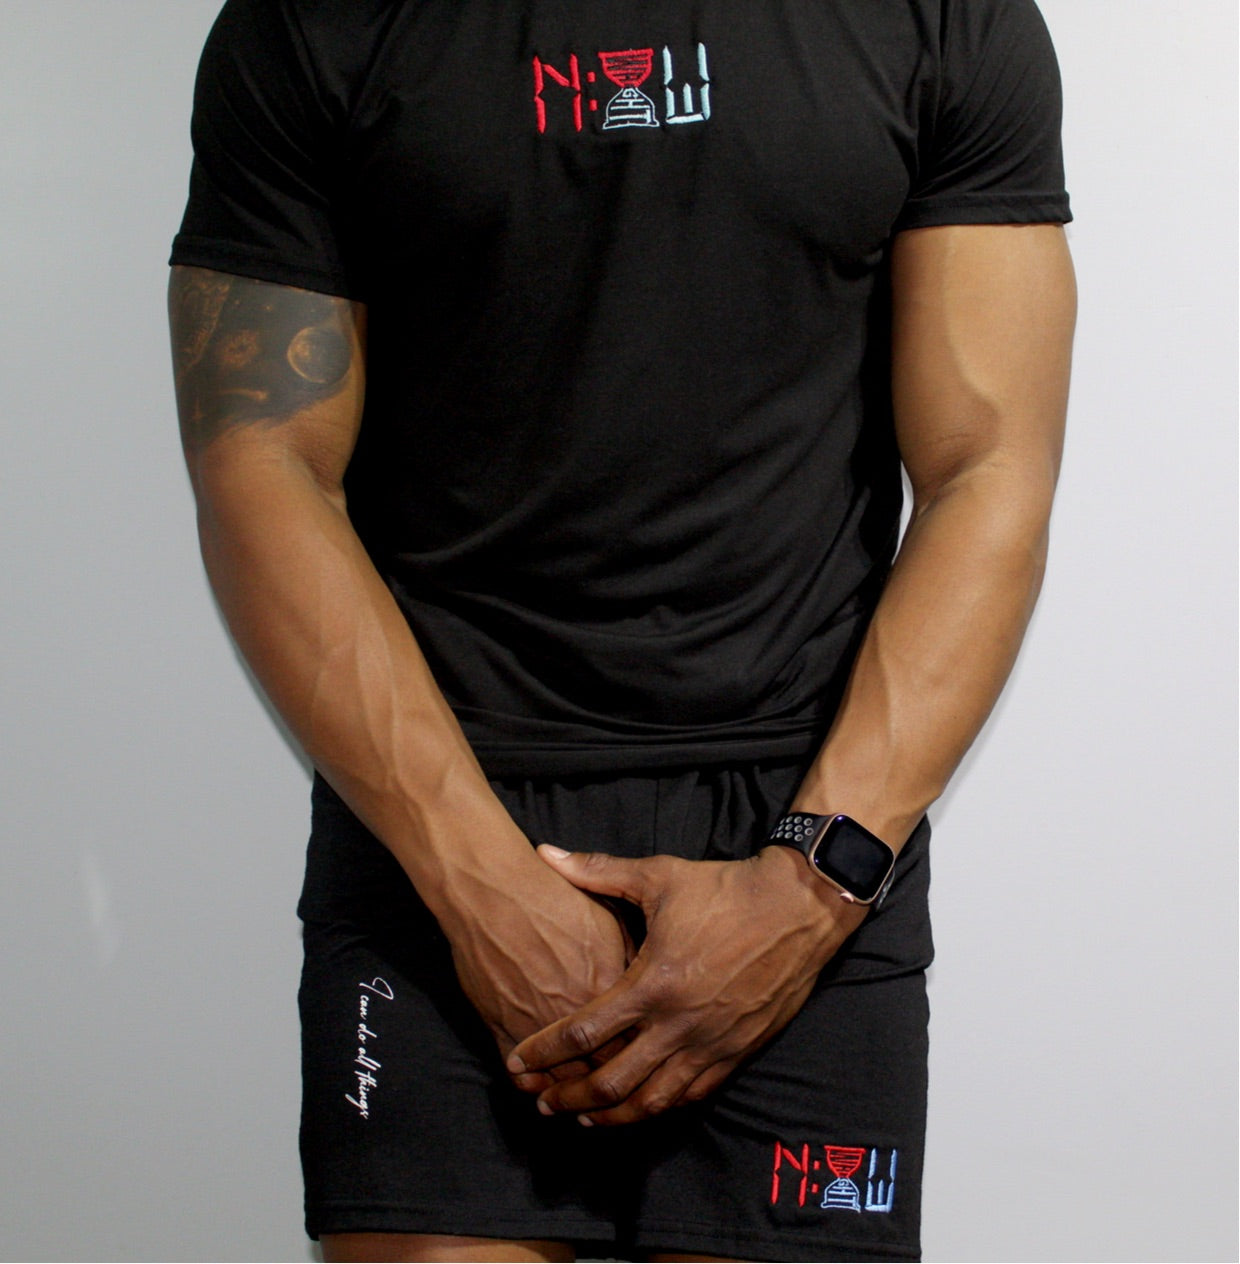 LVFT Shirt Mens Medium M Black Short Sleeve Performance Athletic